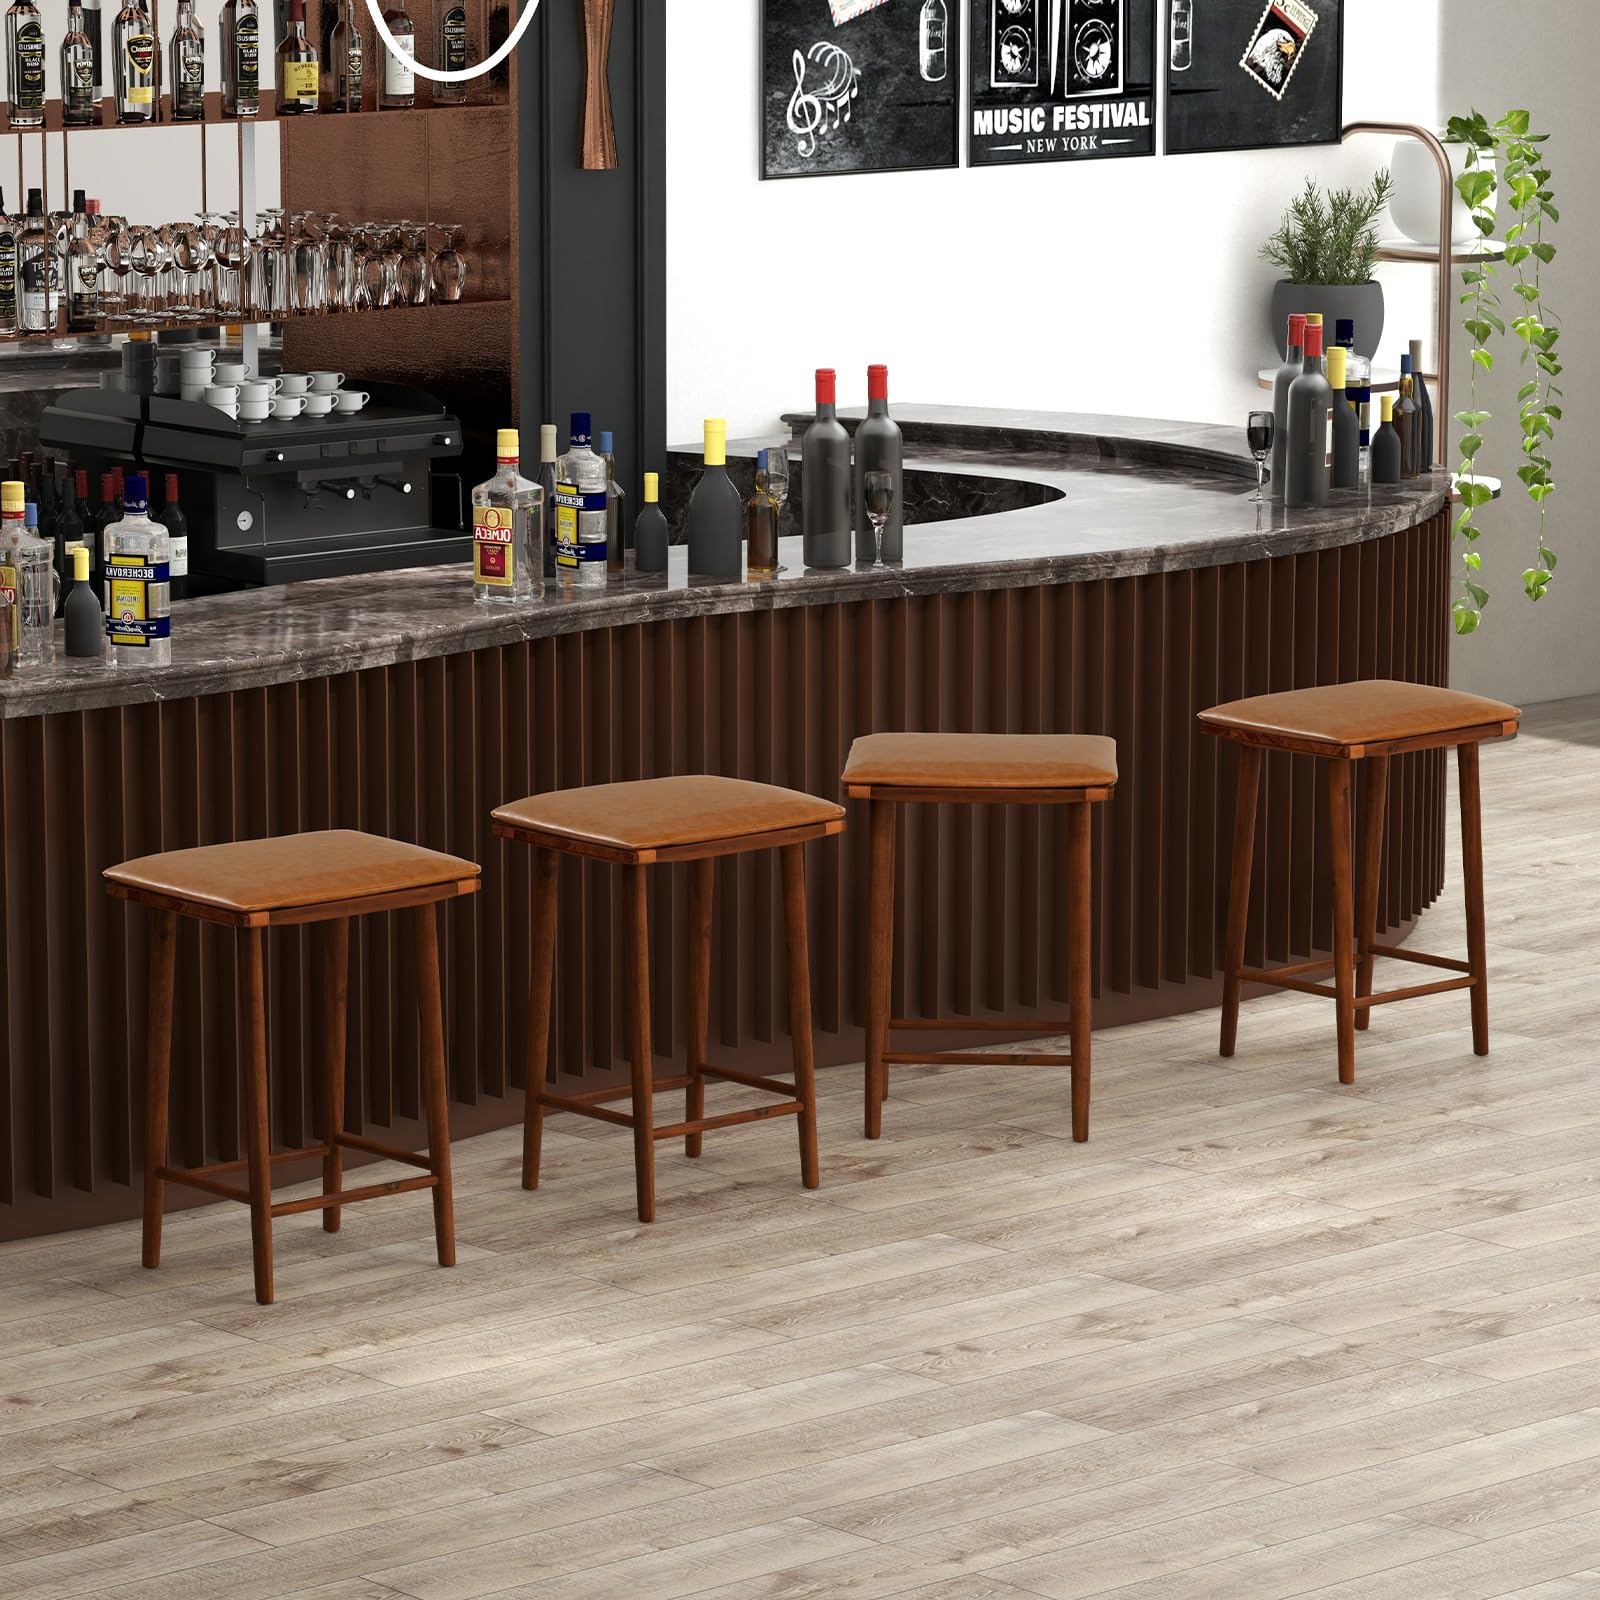 Giantex Bar Stools Set of 4, Wooden Backless Barstools for Kitchen Island